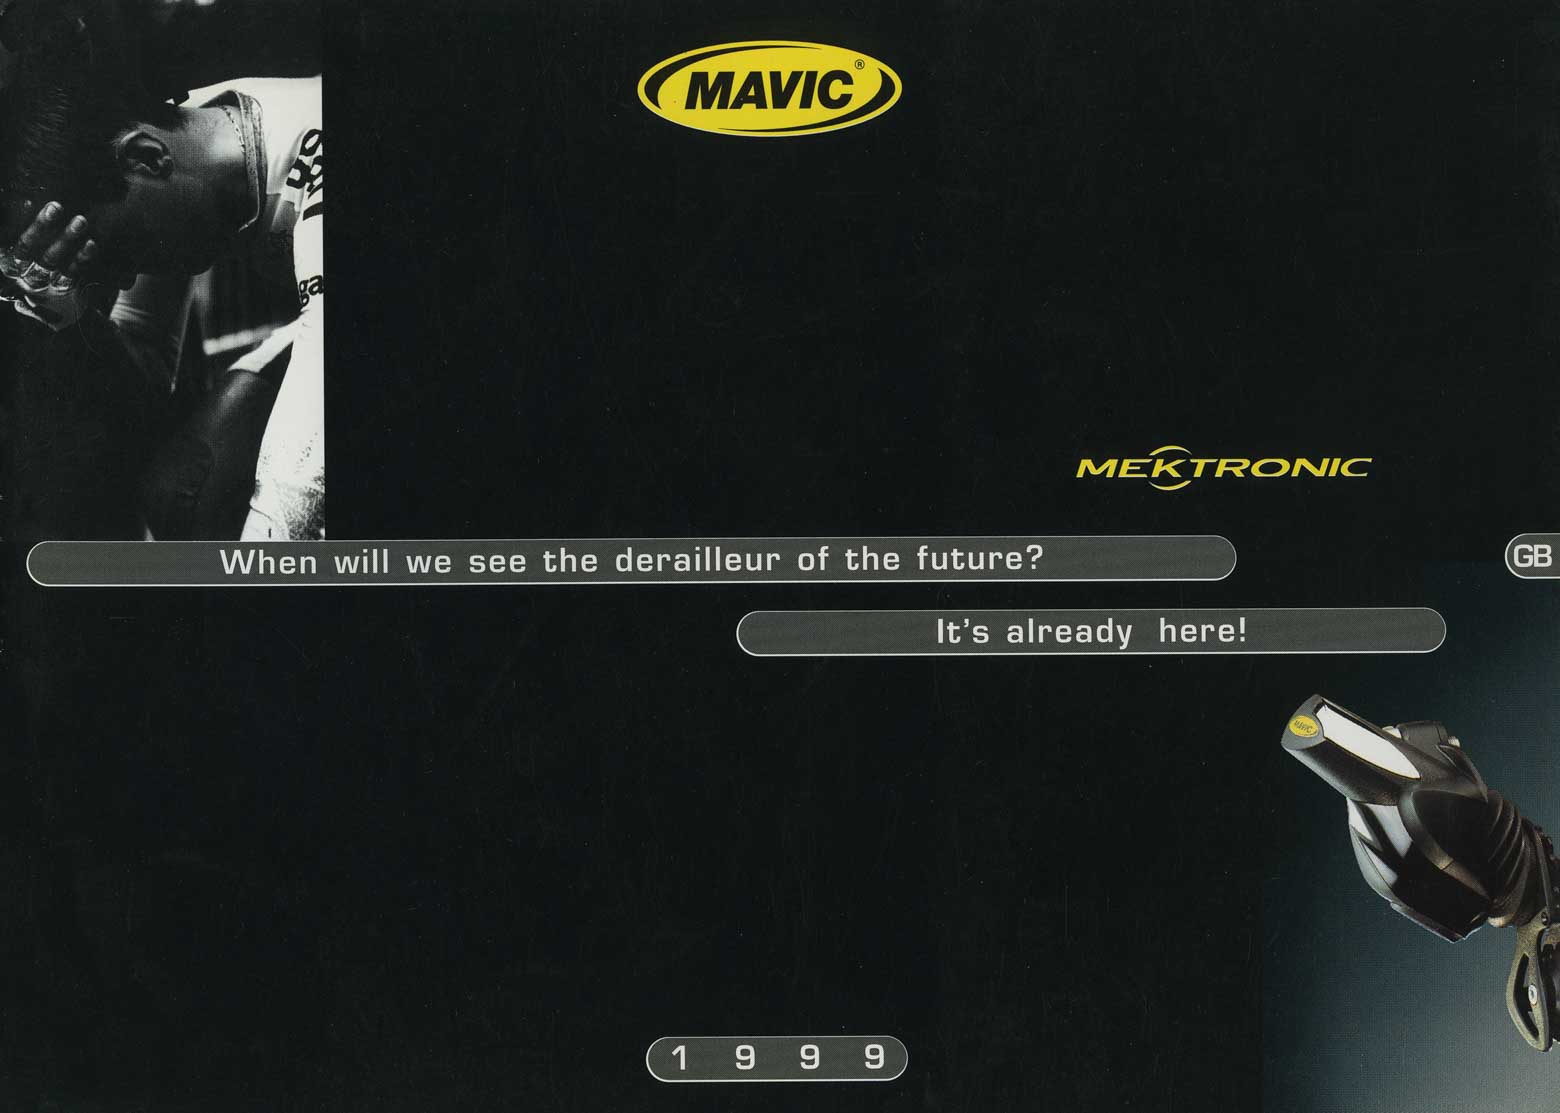 MAVIC - Mektronic 1999 scan 01 main image